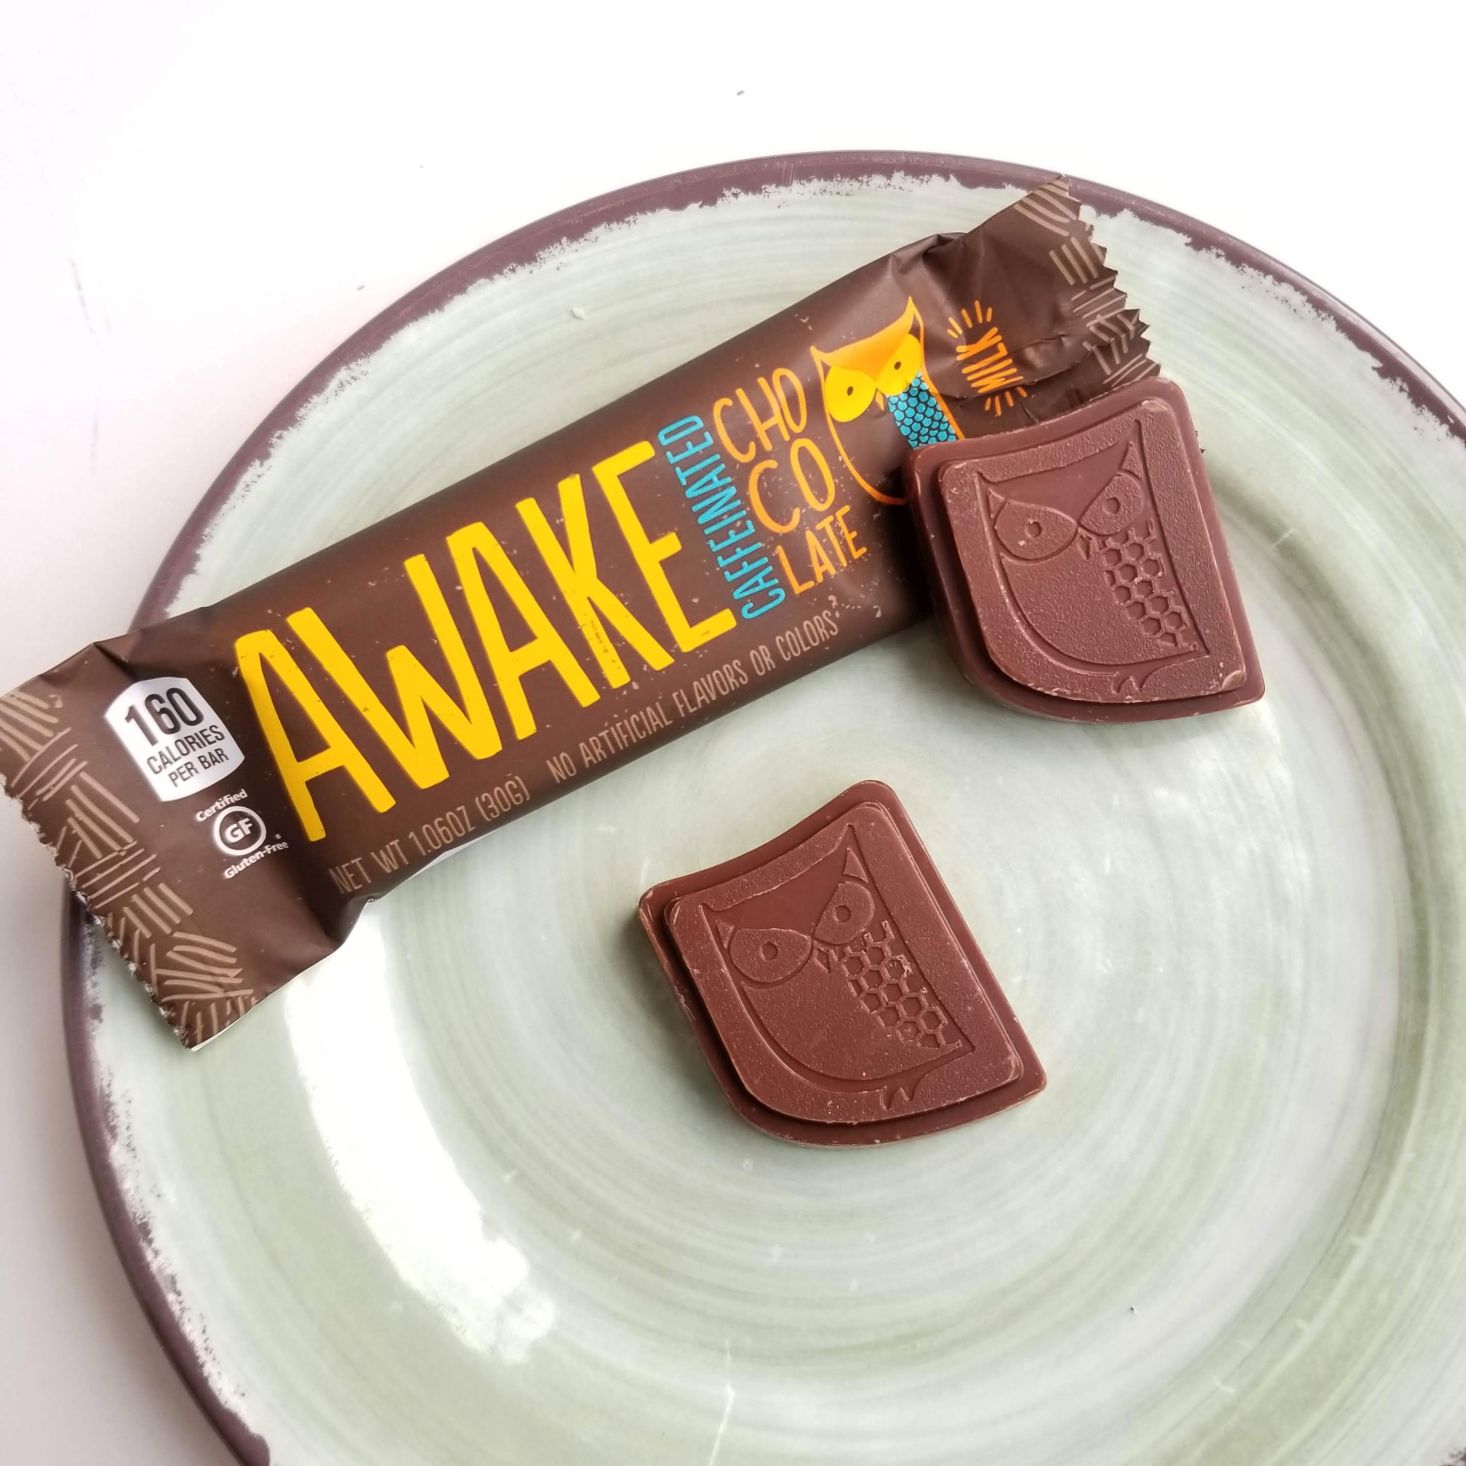 Snack Nation December 2019 awake chocolates open